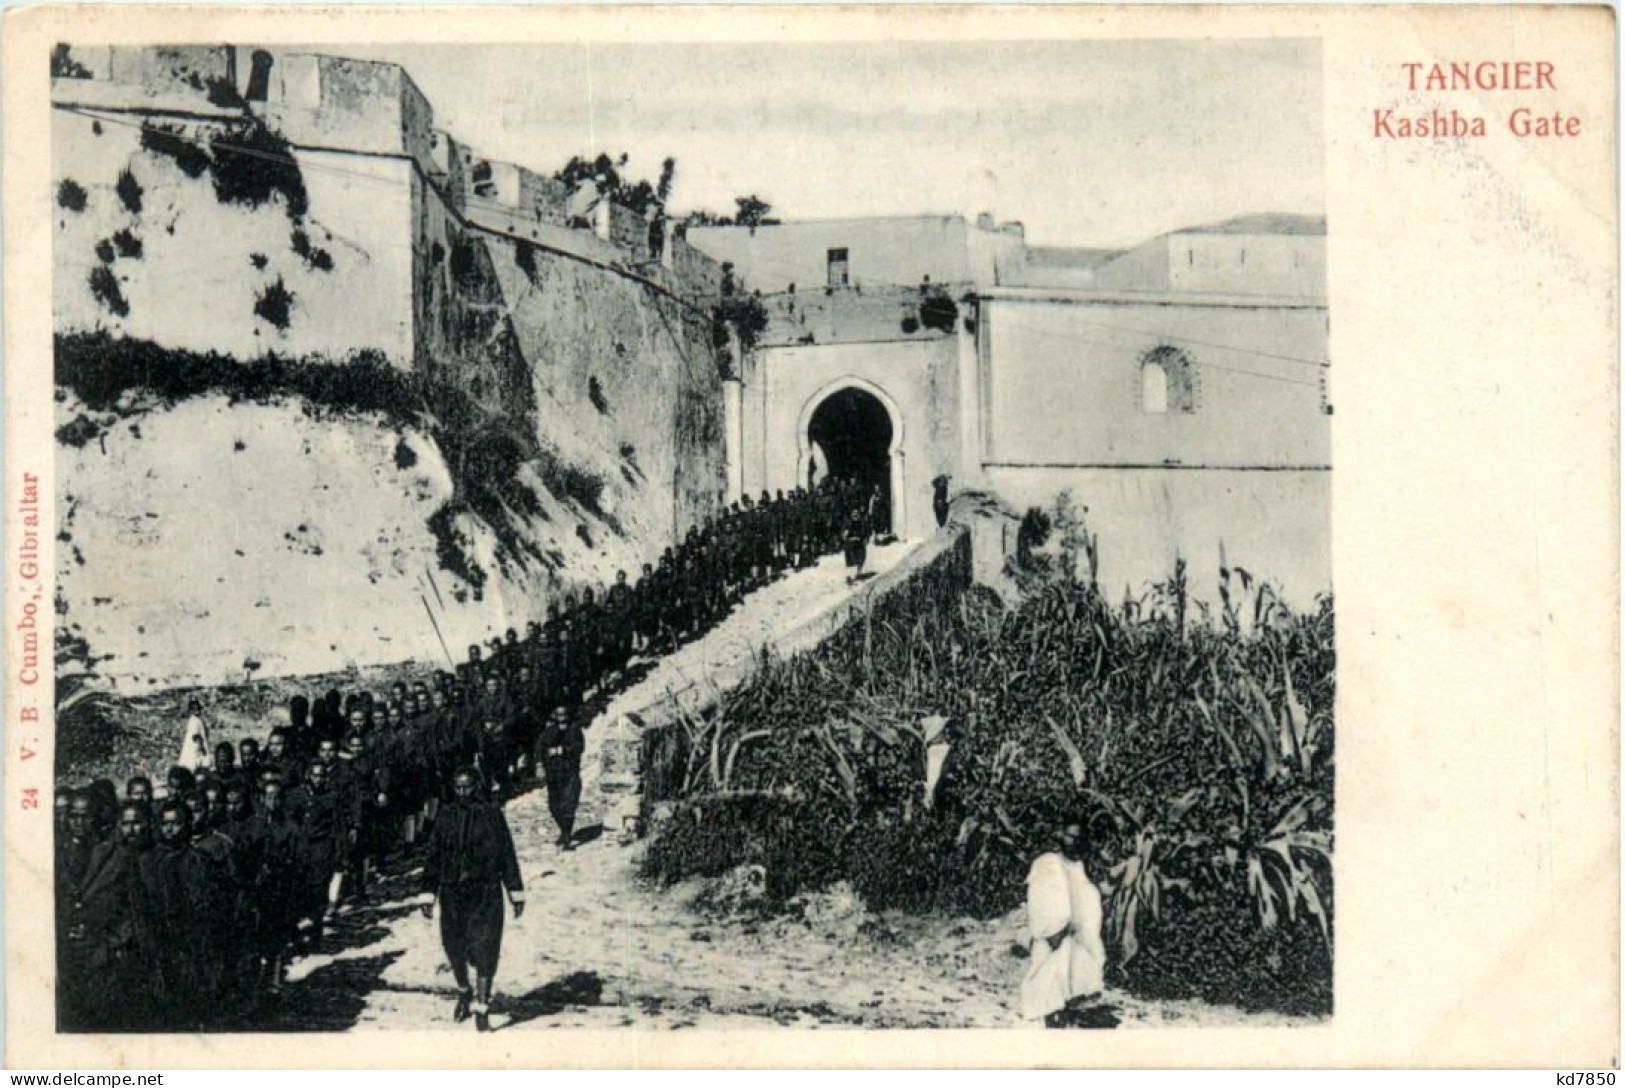 Tangier - Kashba Gate - Tanger